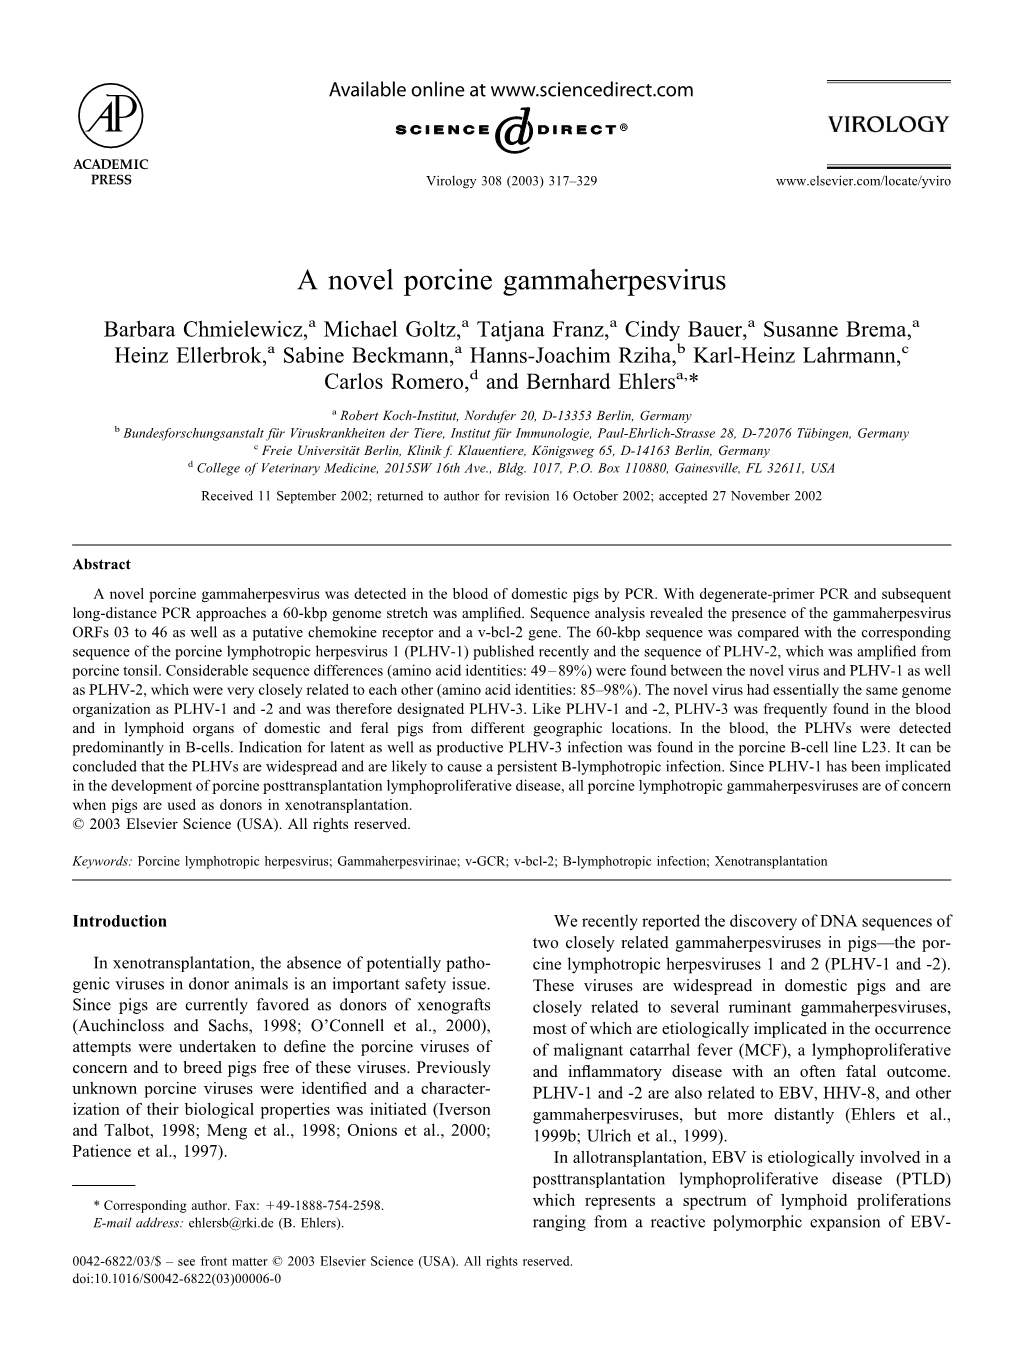 A Novel Porcine Gammaherpesvirus